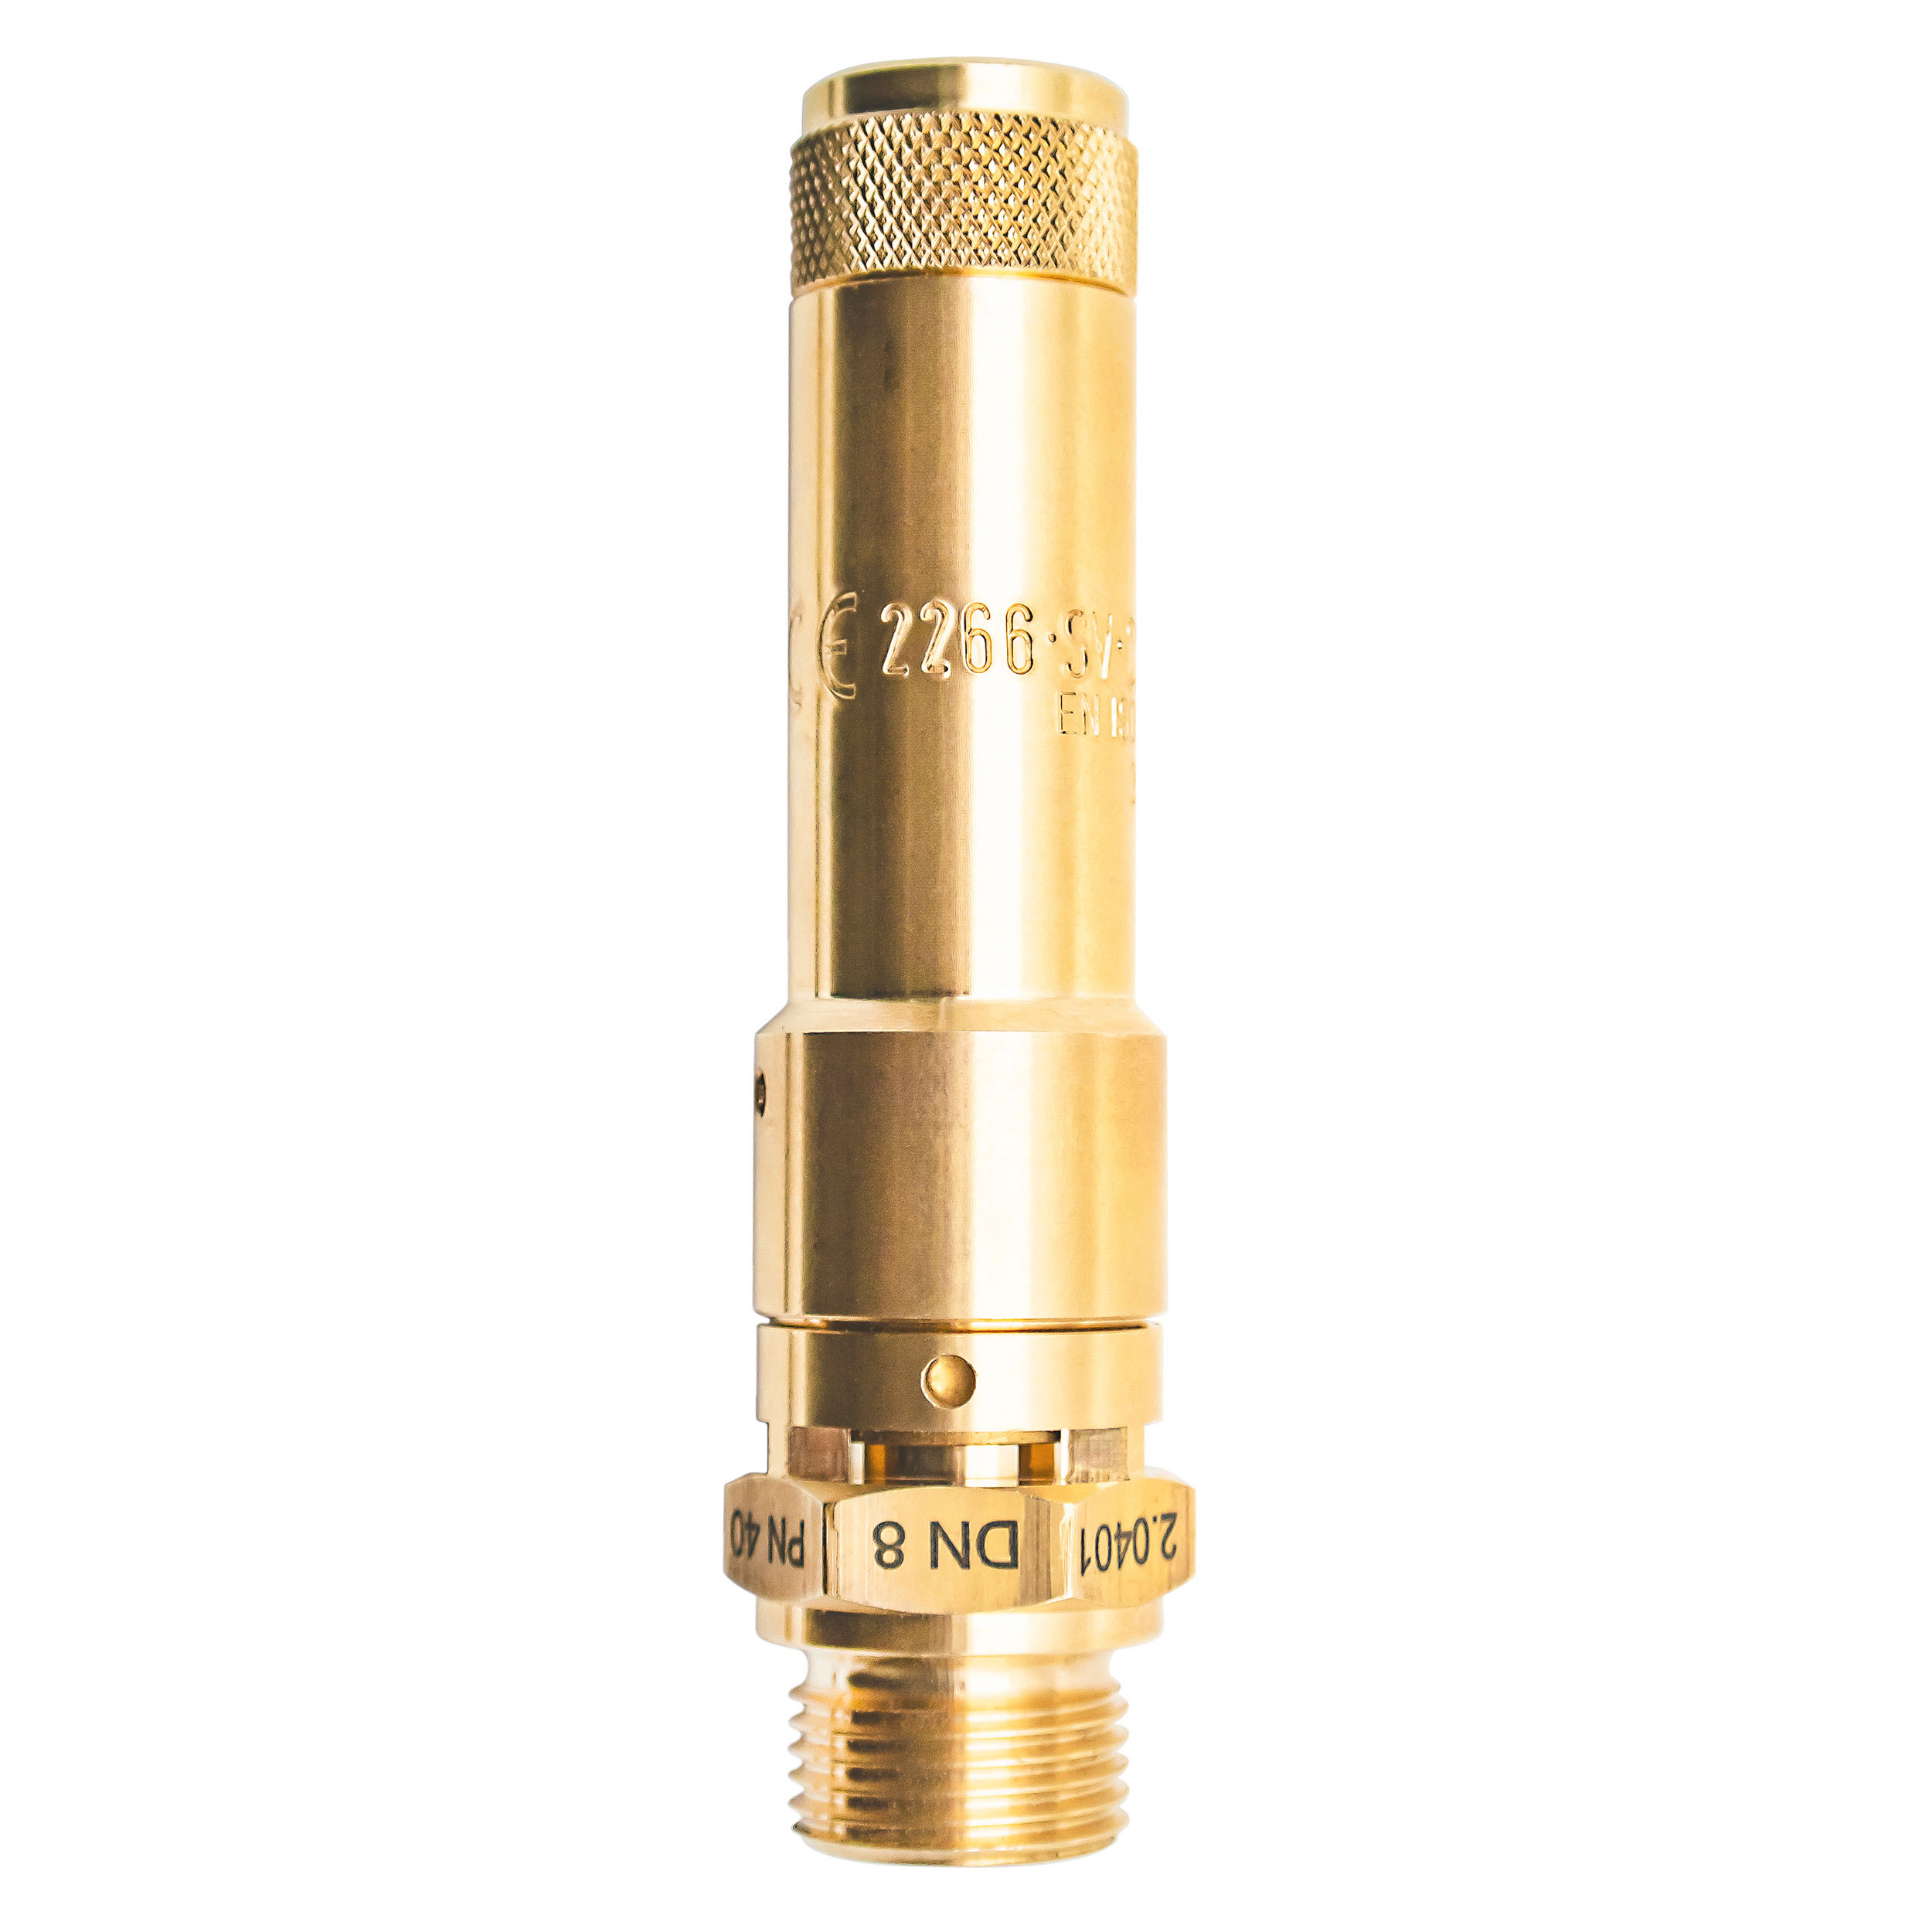 Savety valve component tested DN 8, G¼, set pressure: 22.3 bar (323,35 psi)